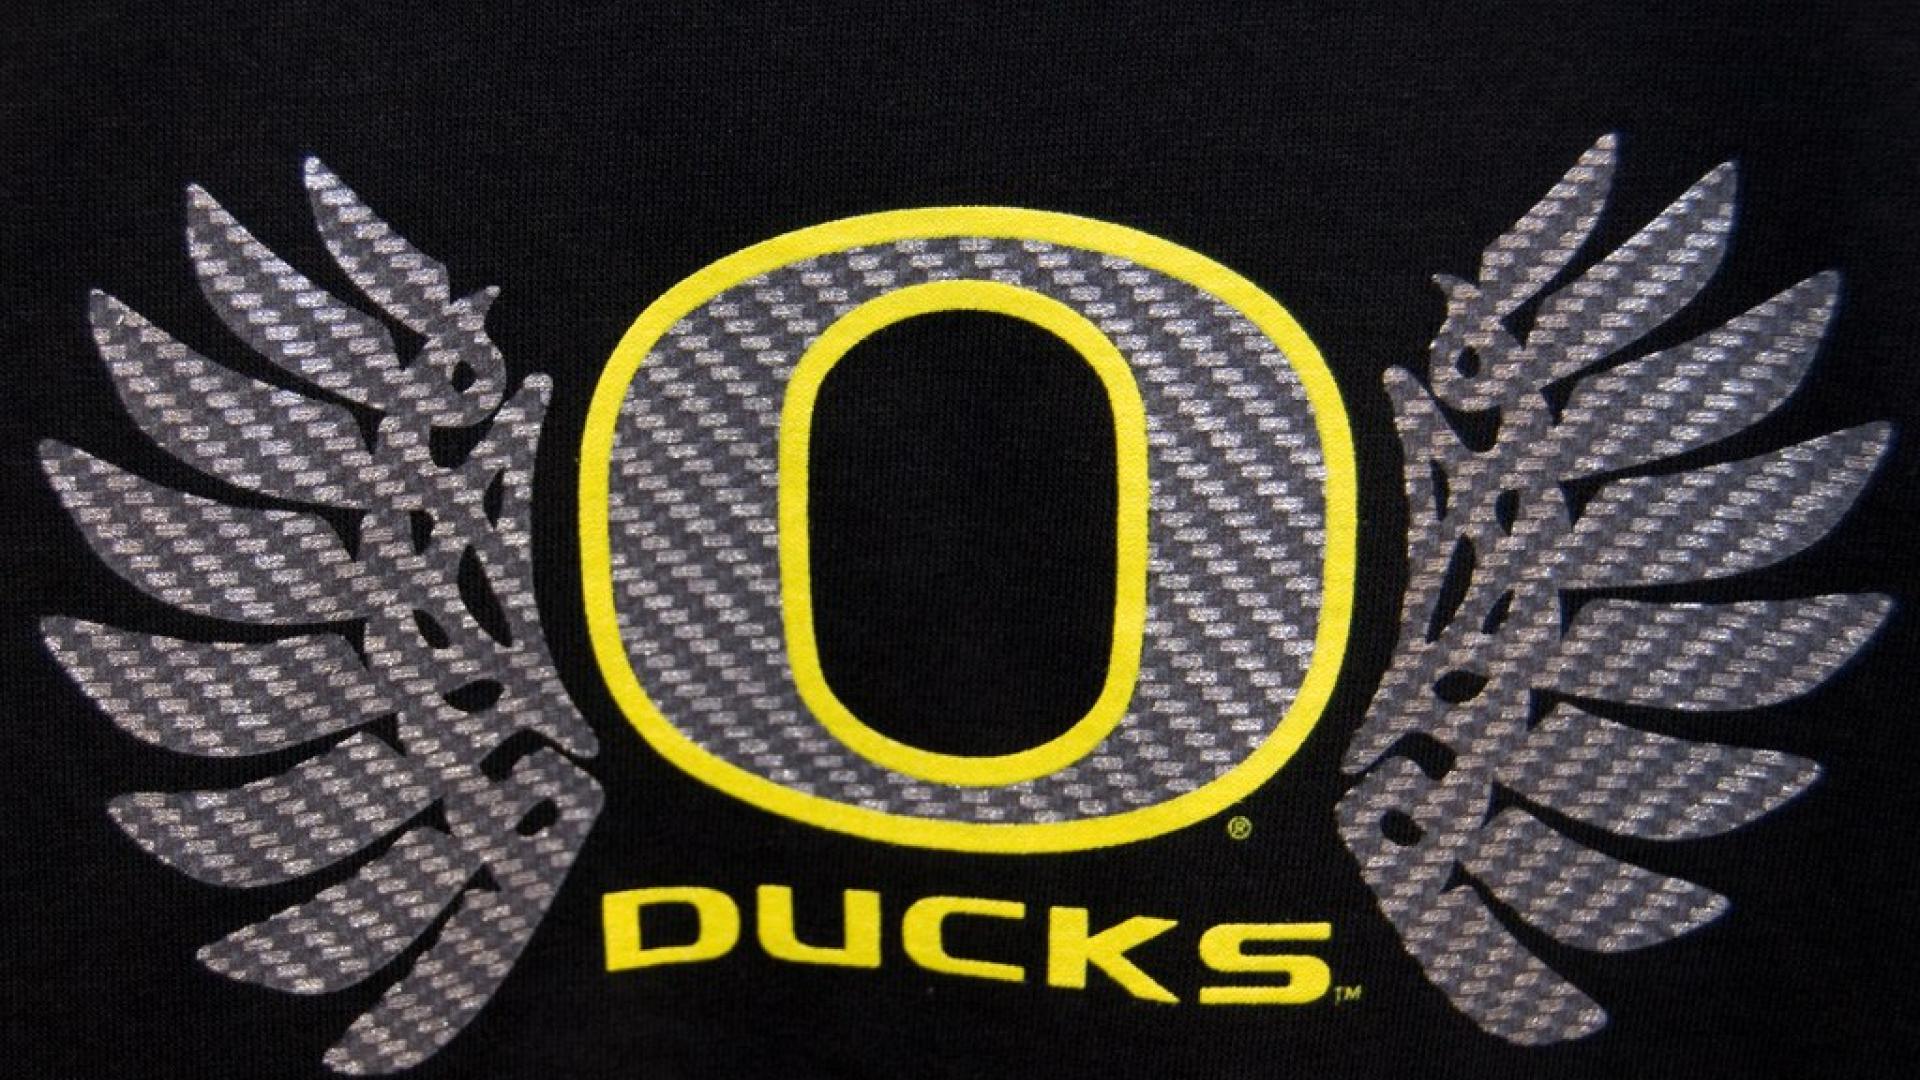 Oregon Ducks Wallpaper